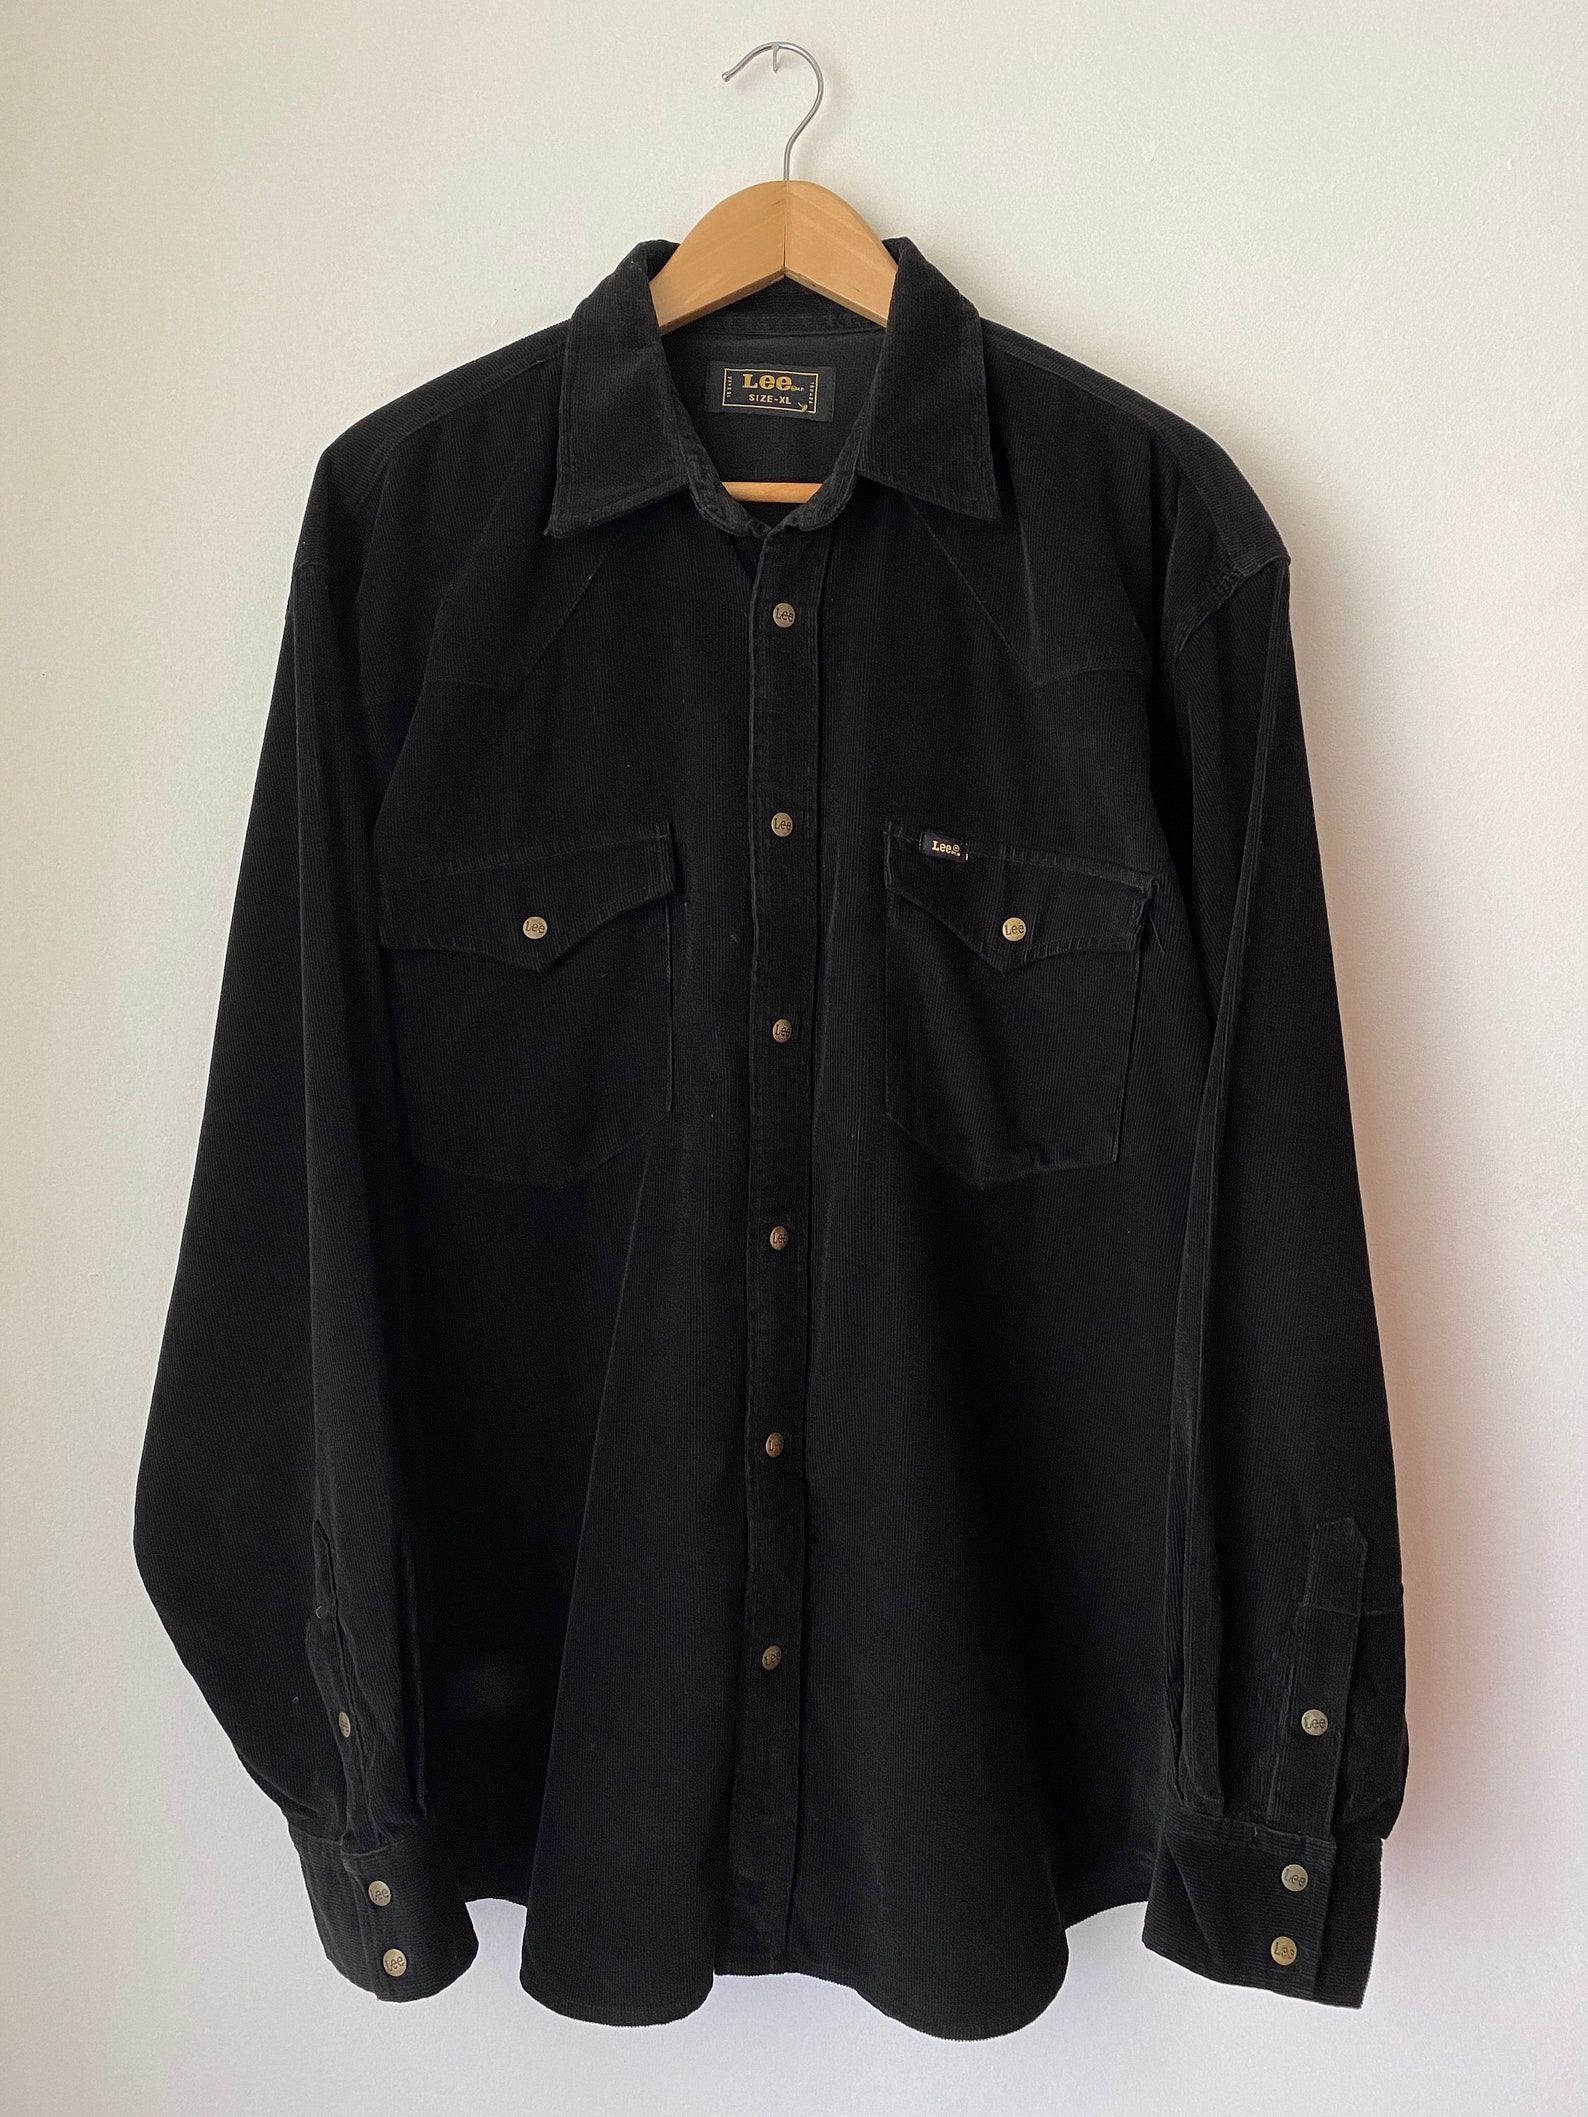 LEE XL Black shirt corduroy long sleeve with pockets | Etsy